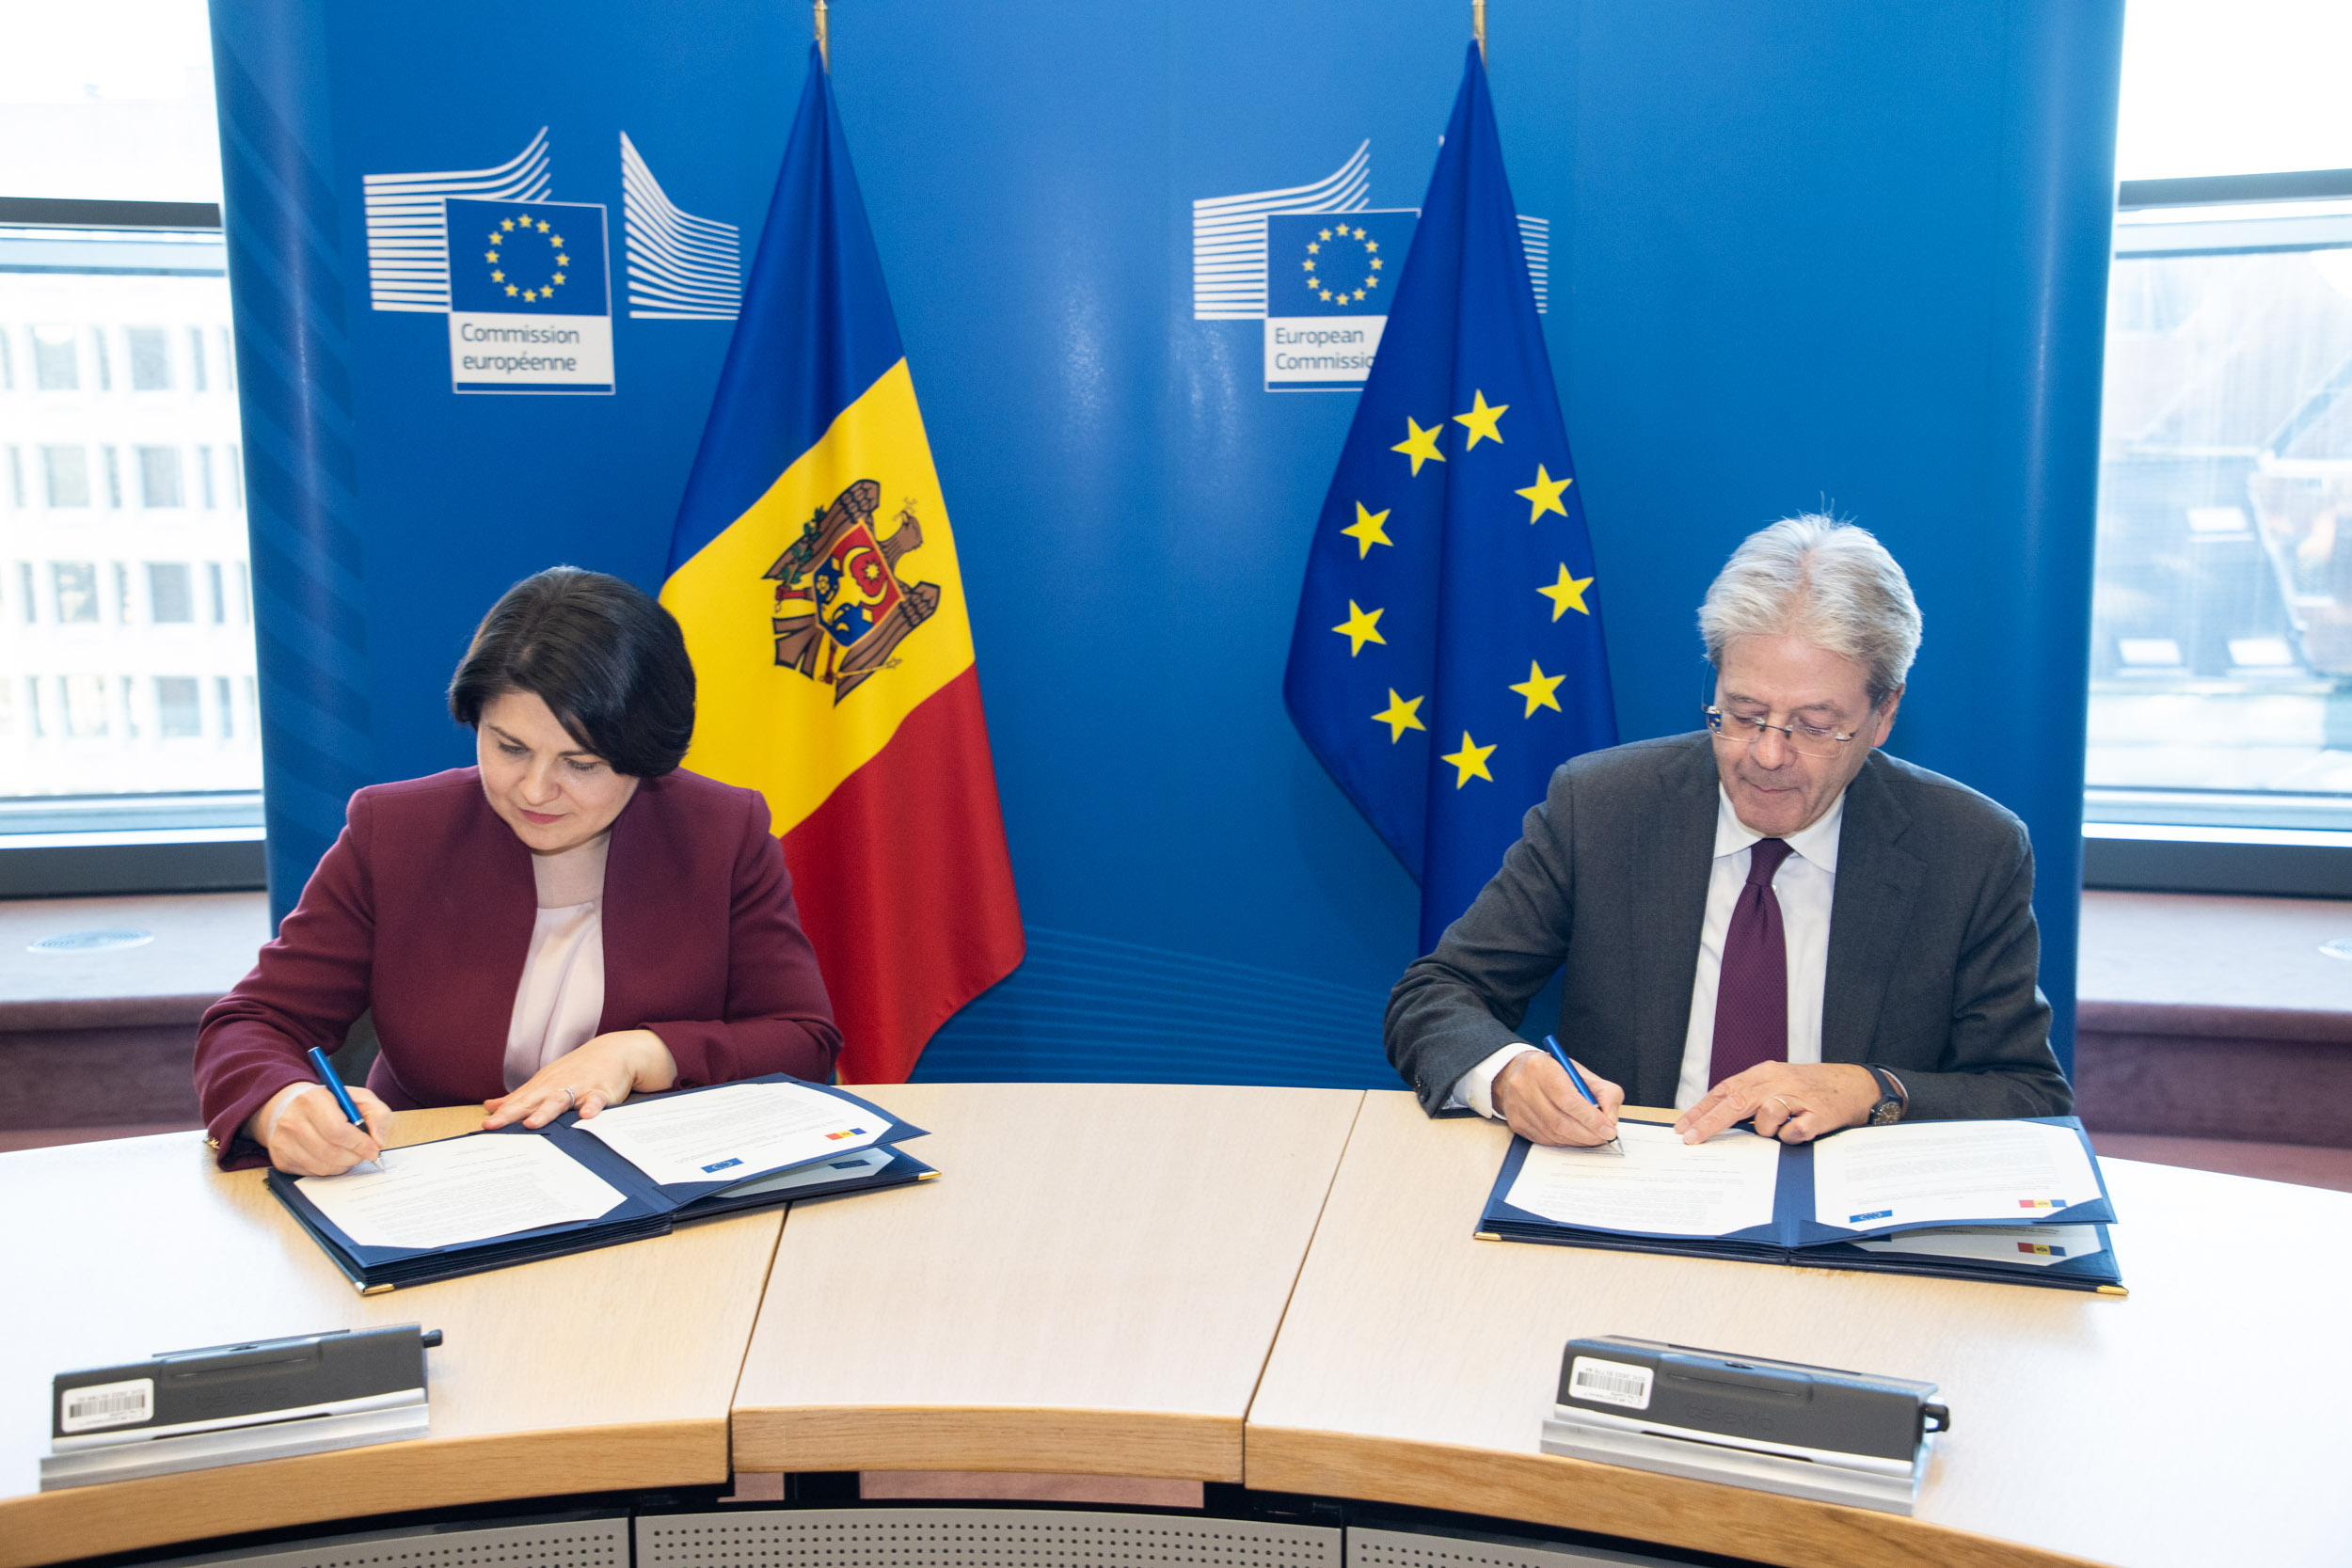 Au fost semnate trei Acorduri cu UE privind domeniul vamal, fiscal și ocrotirii sănătății